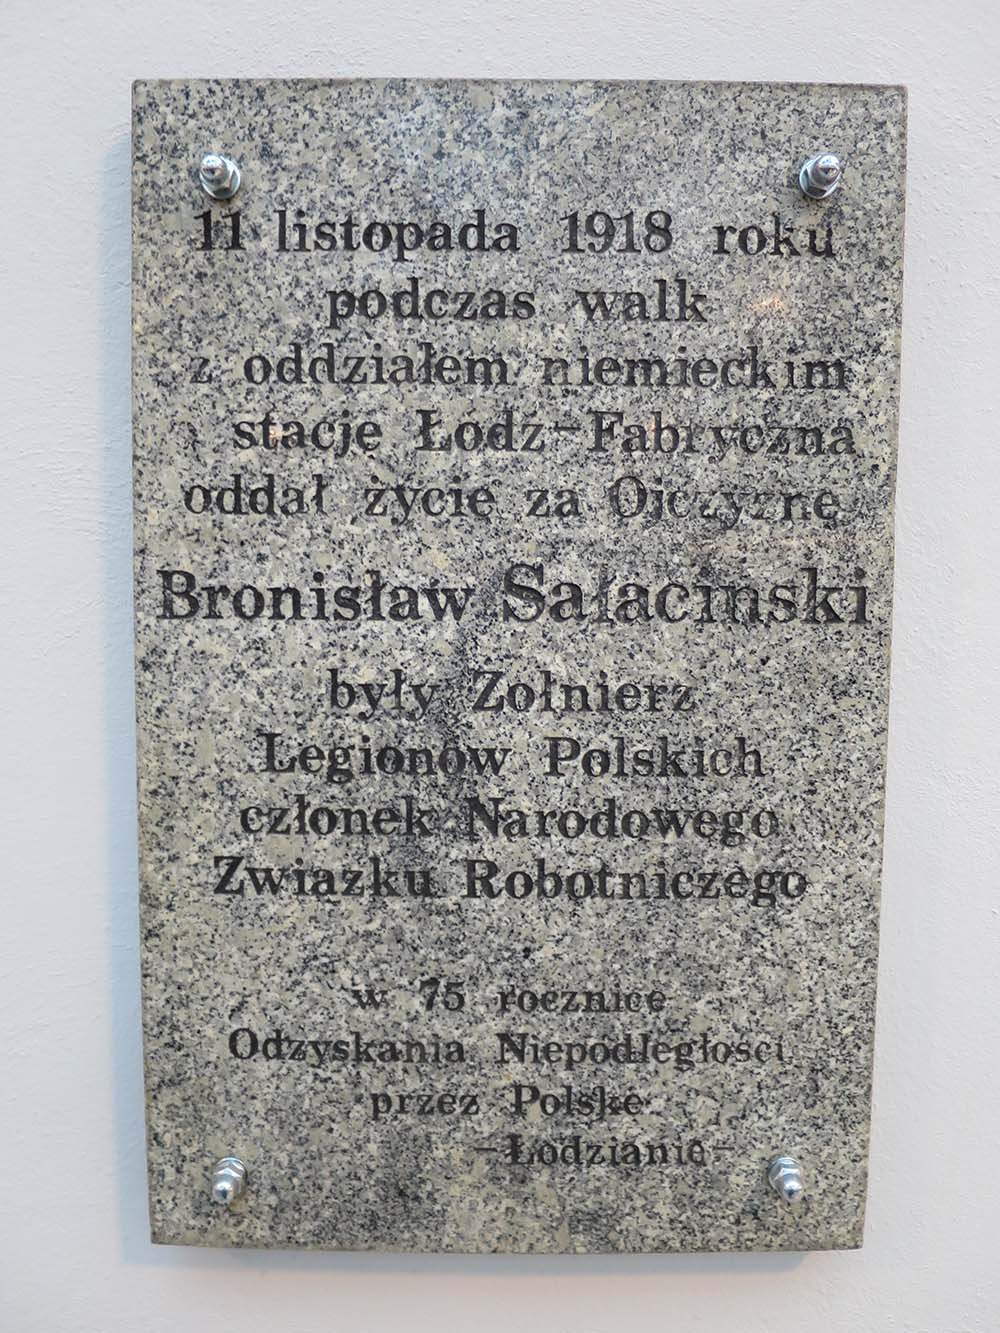 Memorial Bronislaw Salacinski #1